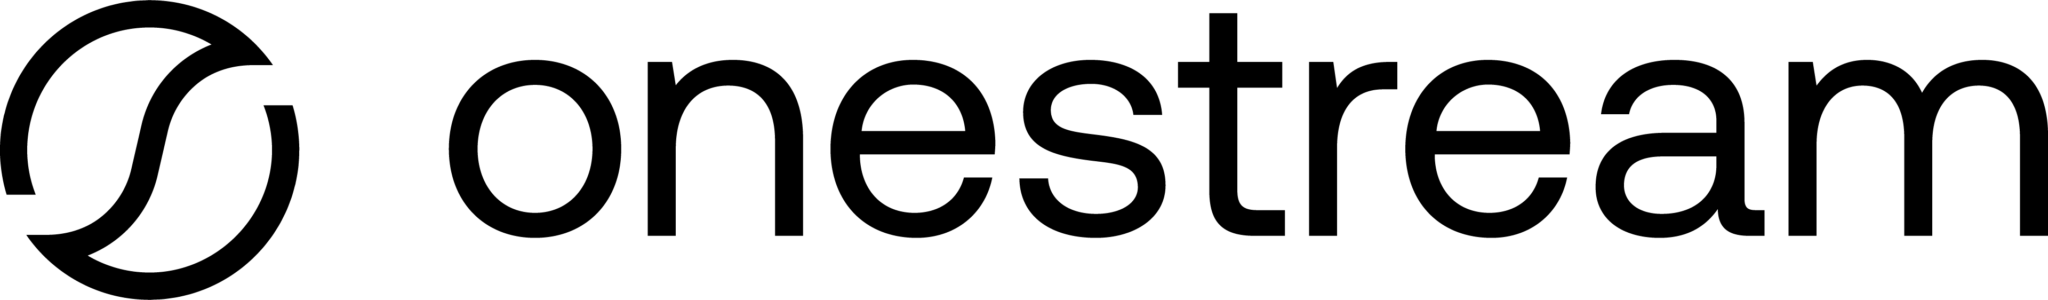 onestream logo